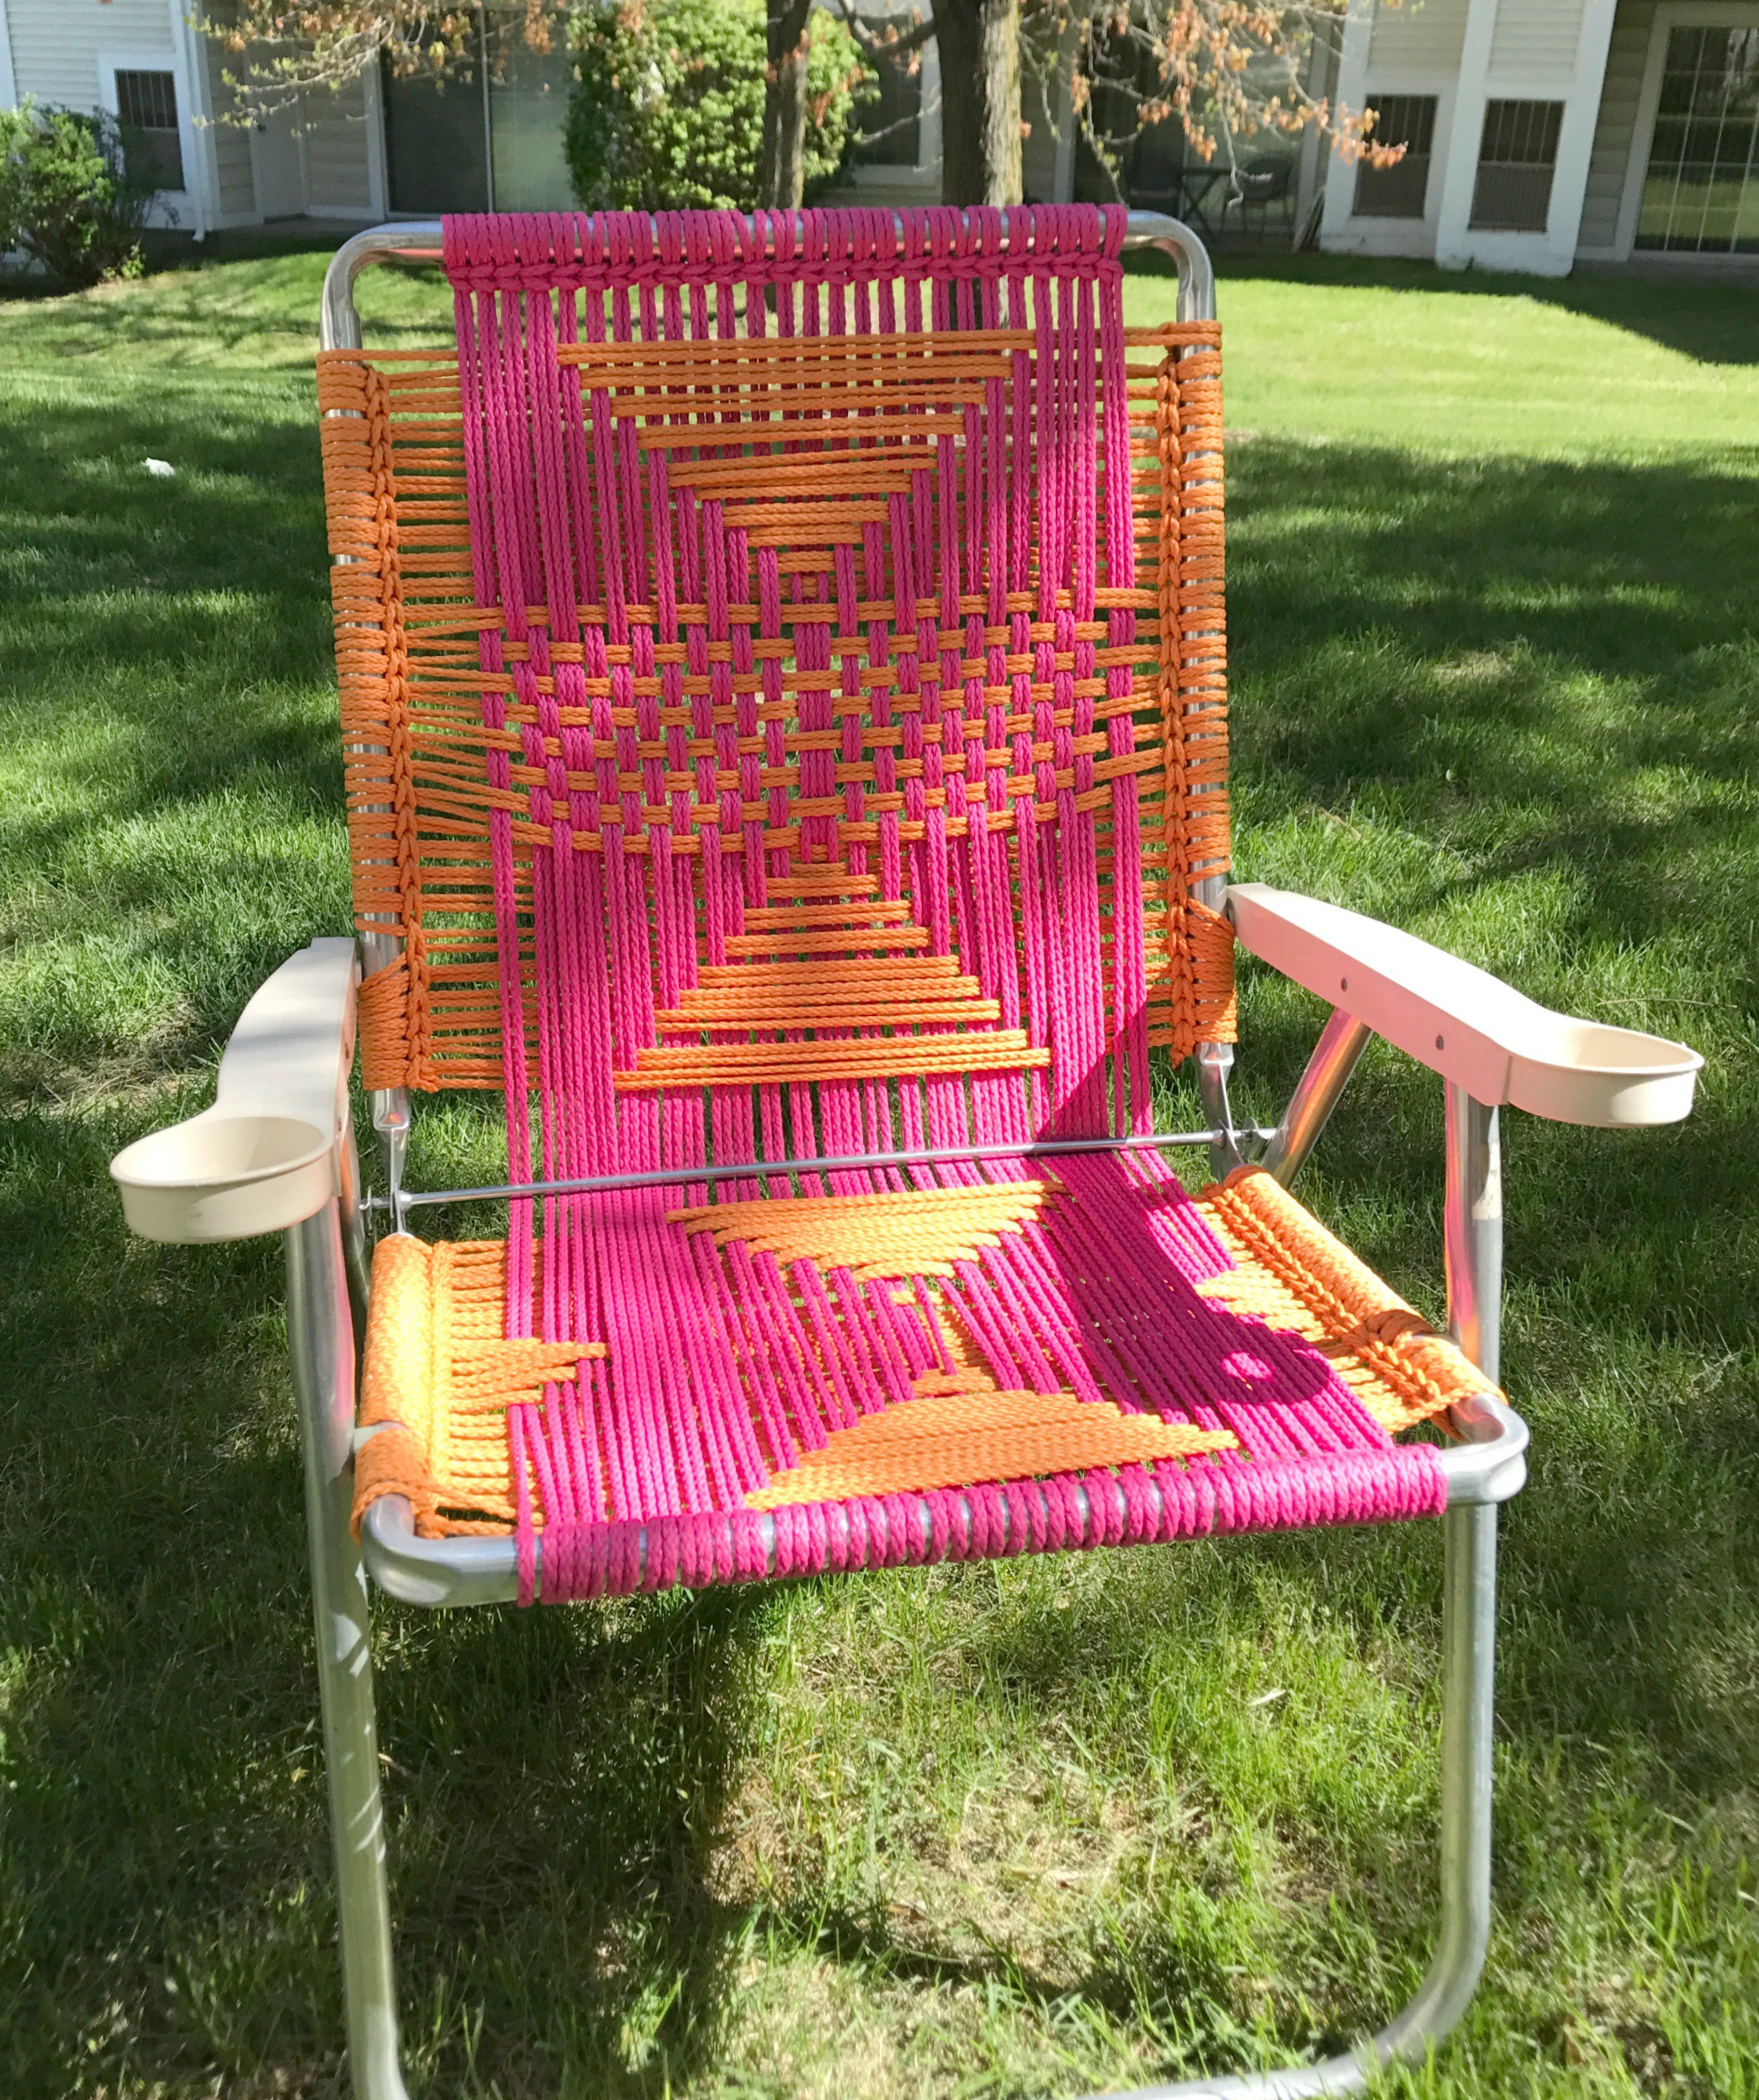 macrame lawn chair tutorial - My French Twist